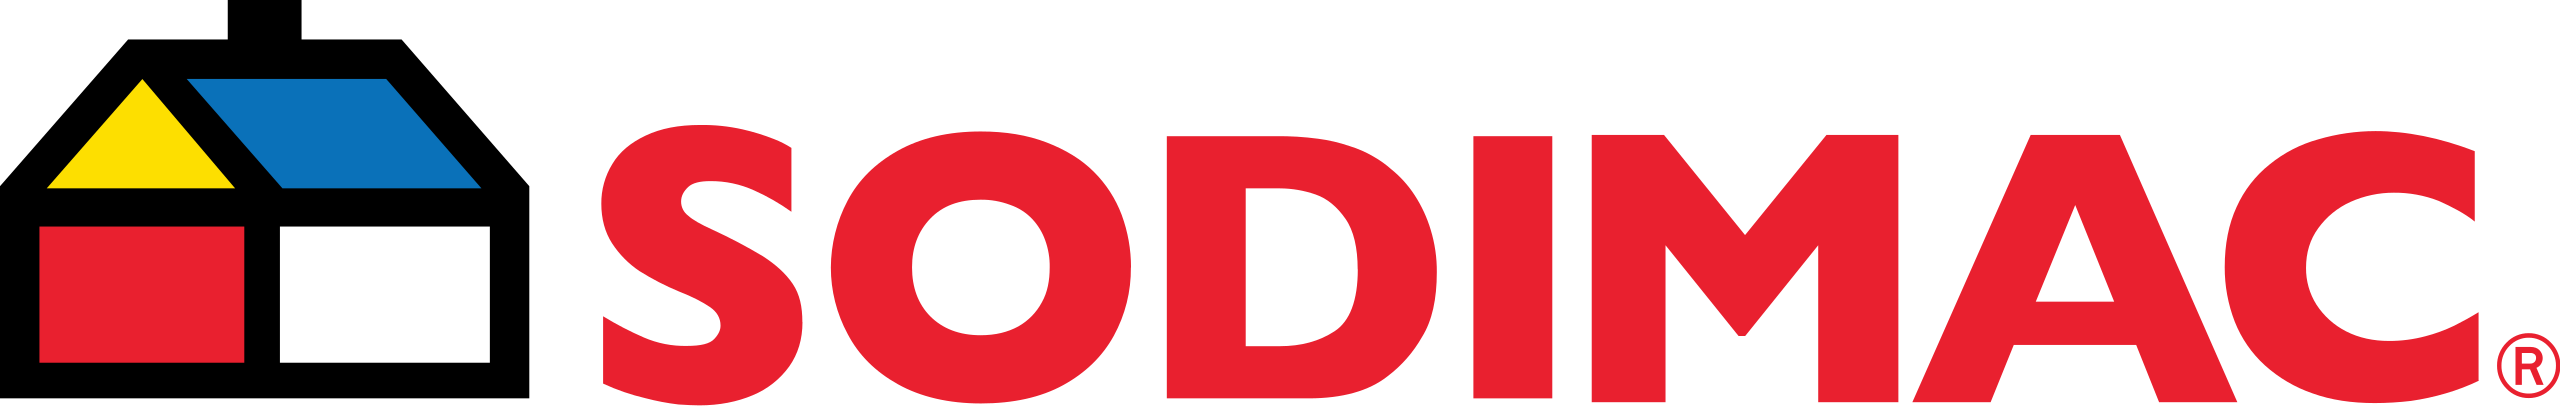 Logotipo_Sodimac.svg